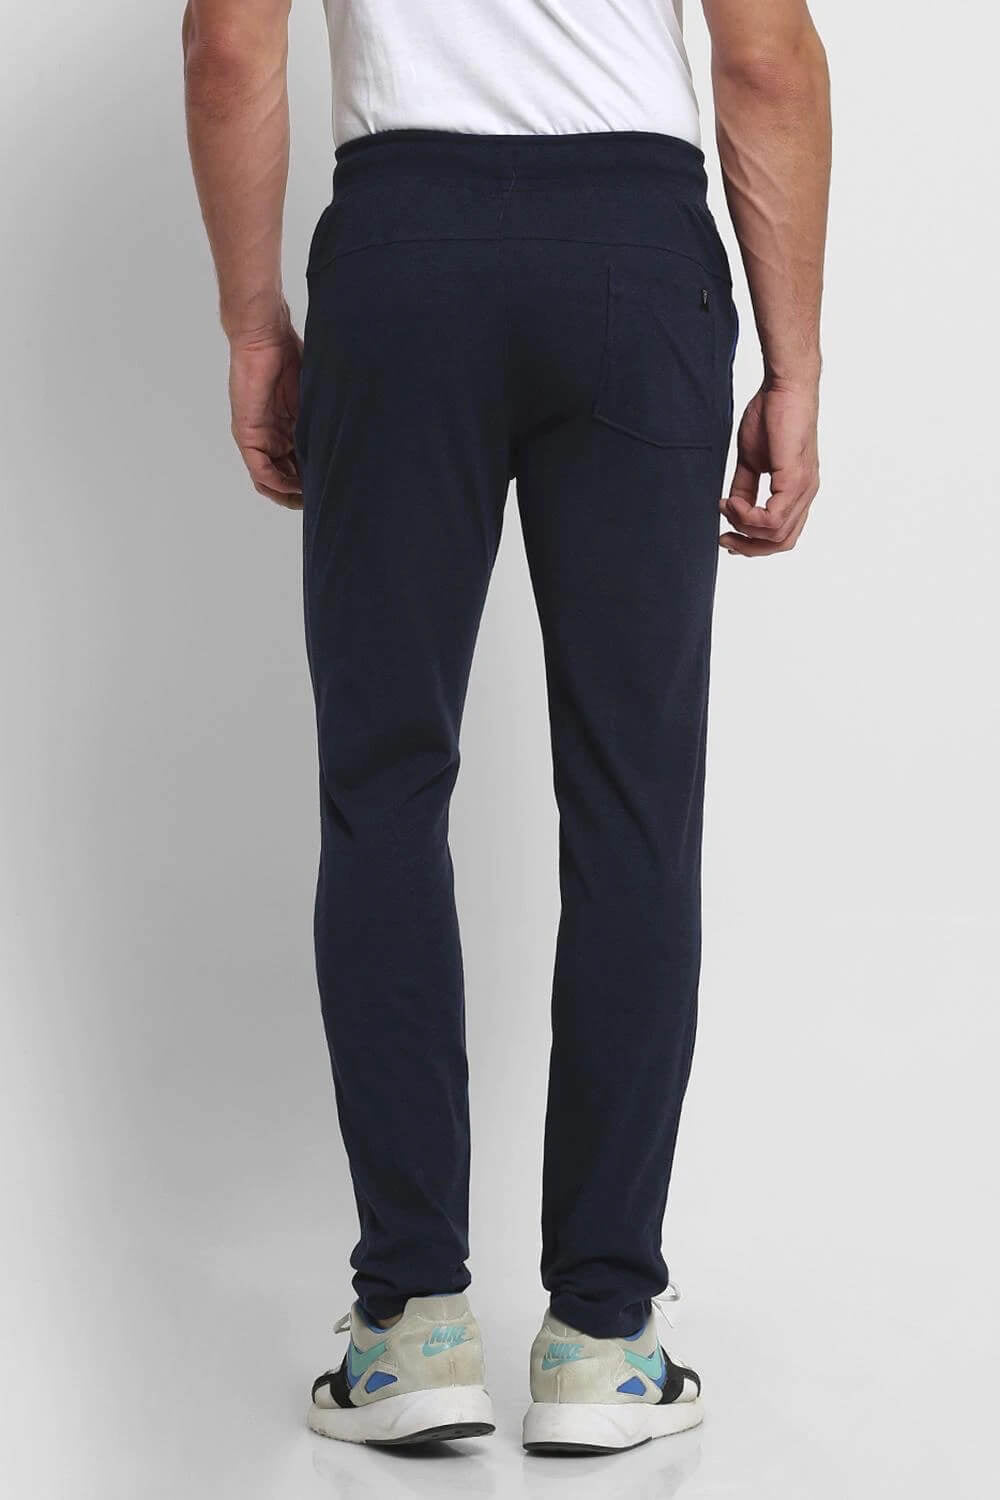 Buy LOUIS STITCH Men's Blue Jeans Italian Denim Cloth Super Stretch  Comfortable Slim Fit Casual Cotton Pants for Men (Waist-28) (JN-BU90-500)  at Amazon.in